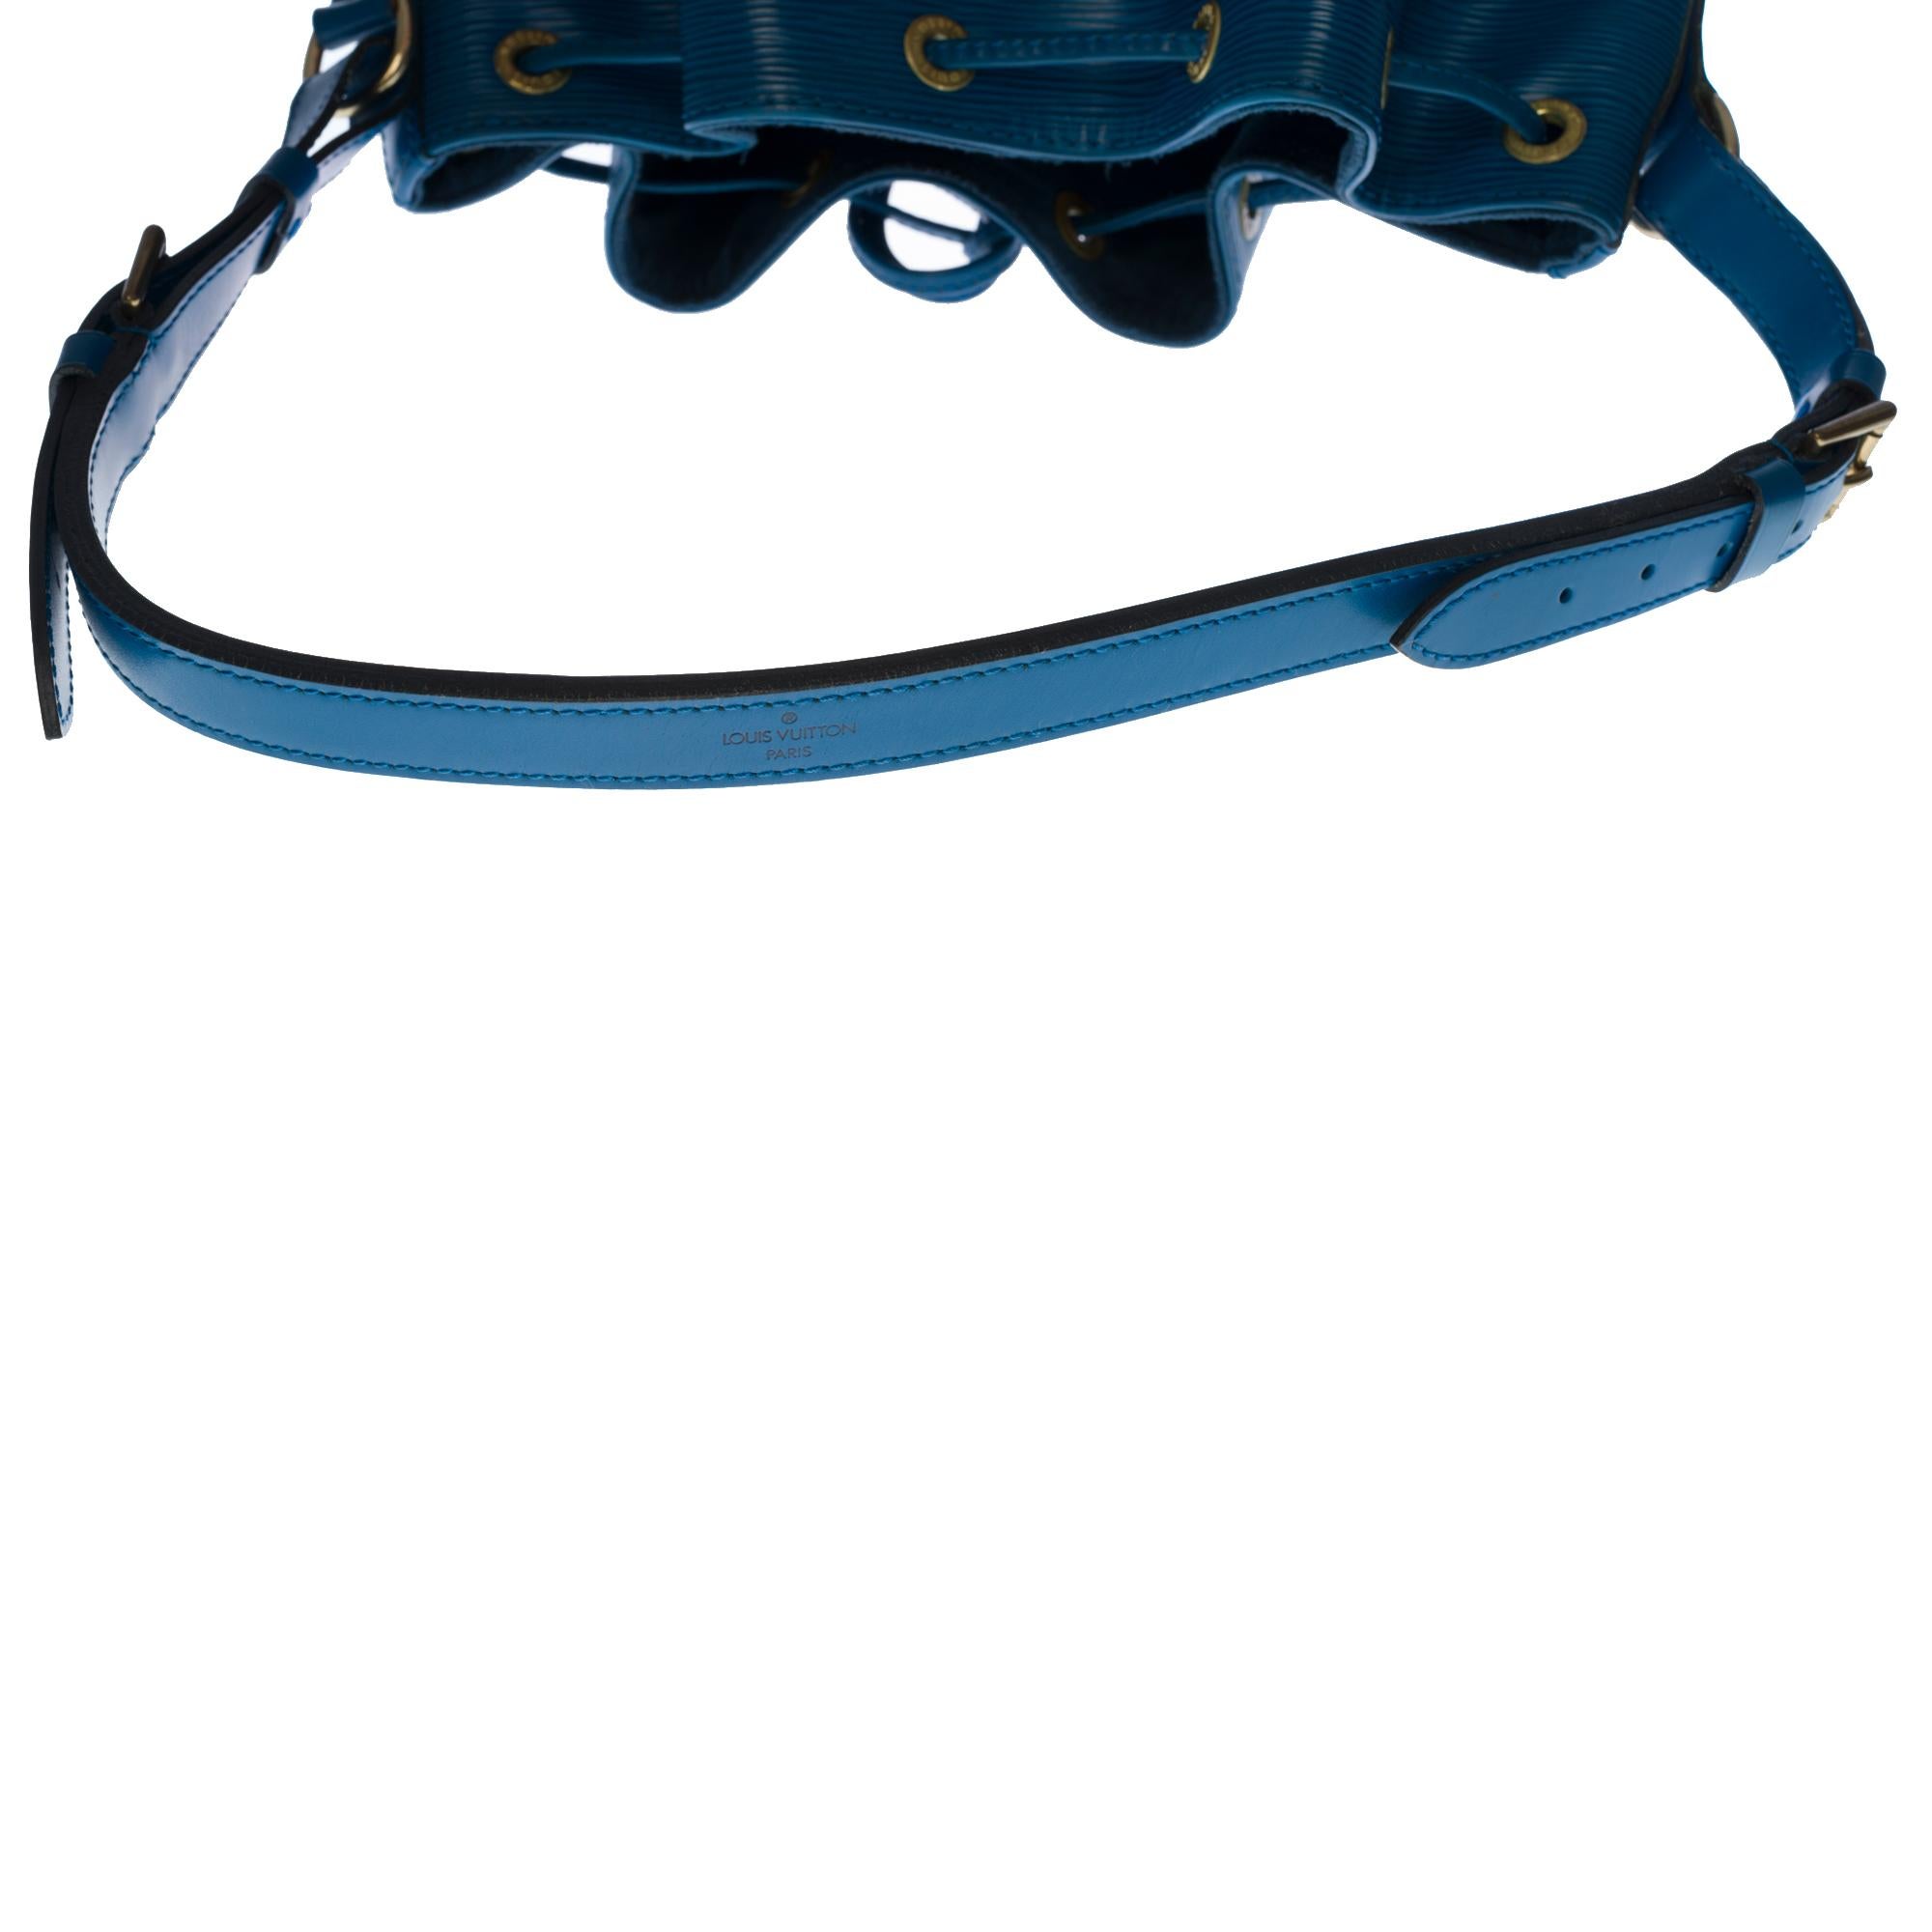 Louis Vuitton Noé Grand modele shoulder bag in blue epi leather with GHW 3